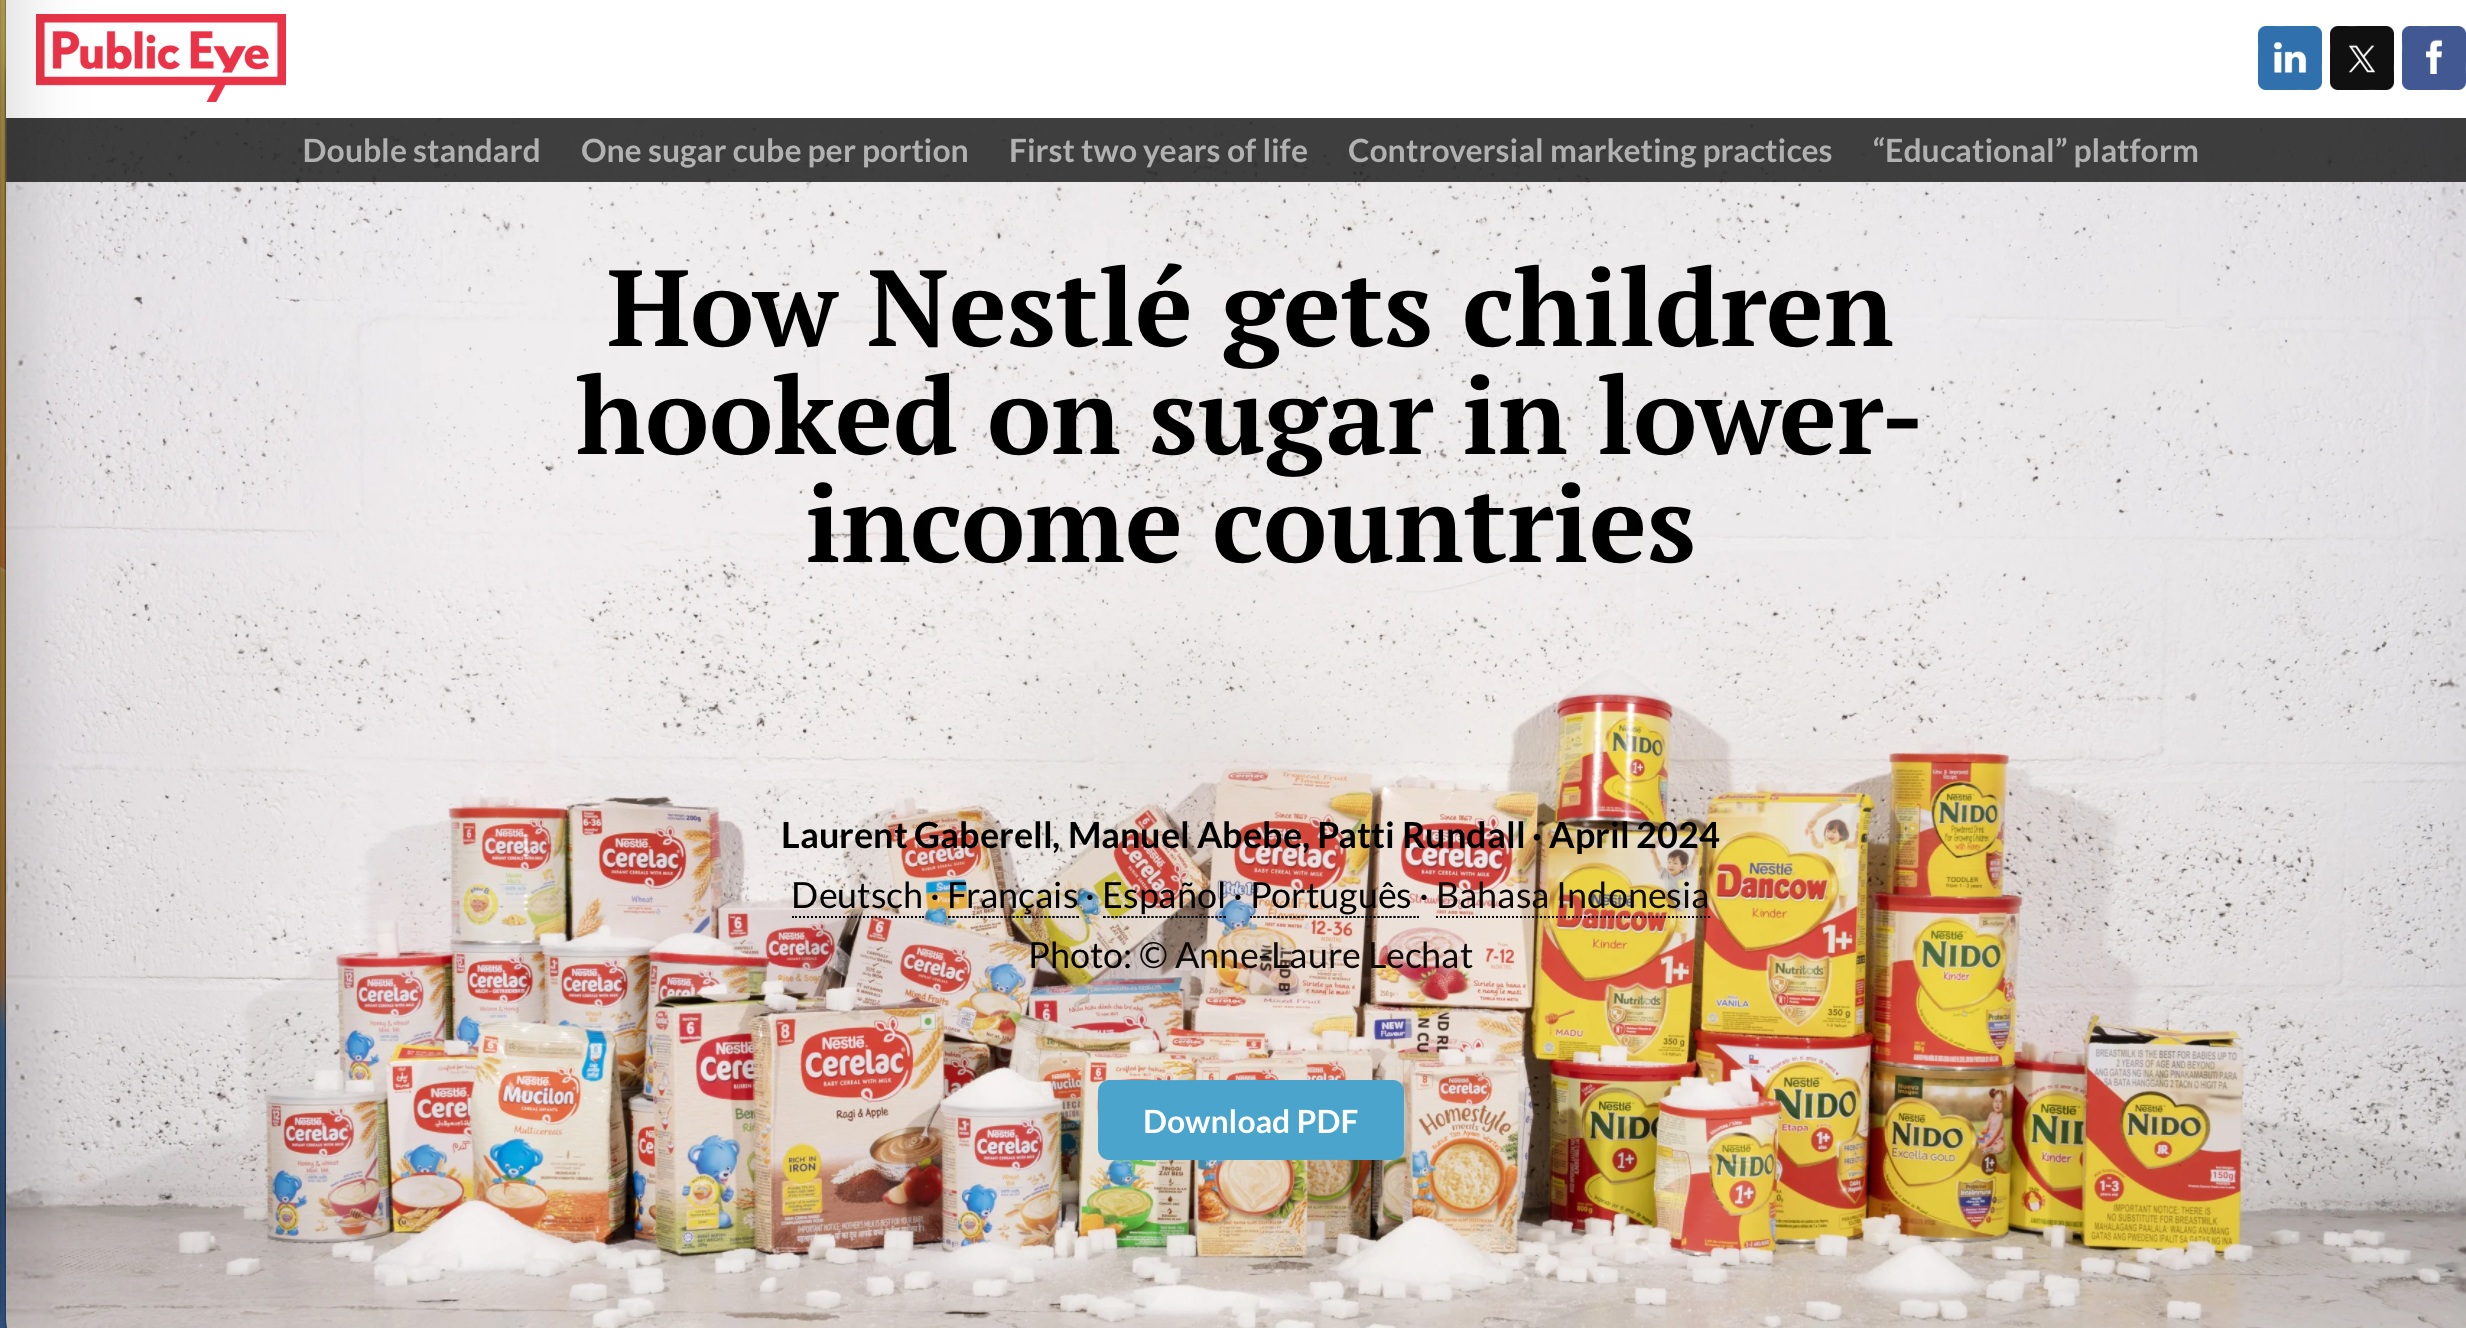 Nestlé double standards exposed